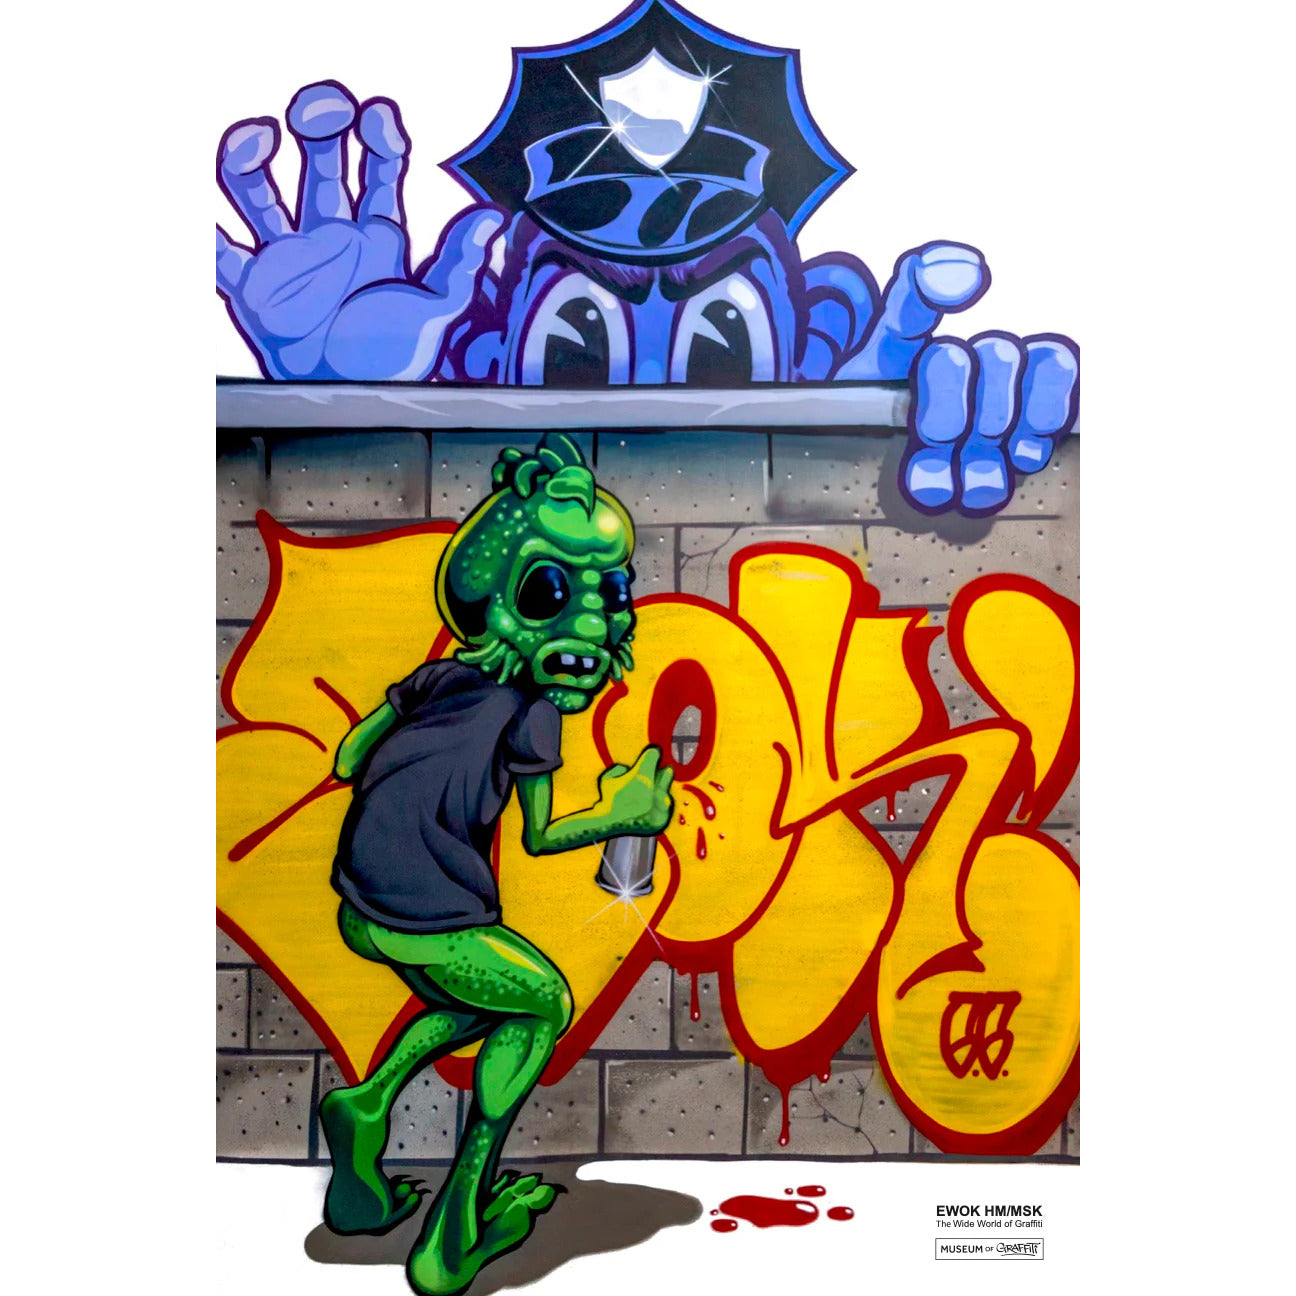 Ewok One's Swamp Monster Poster